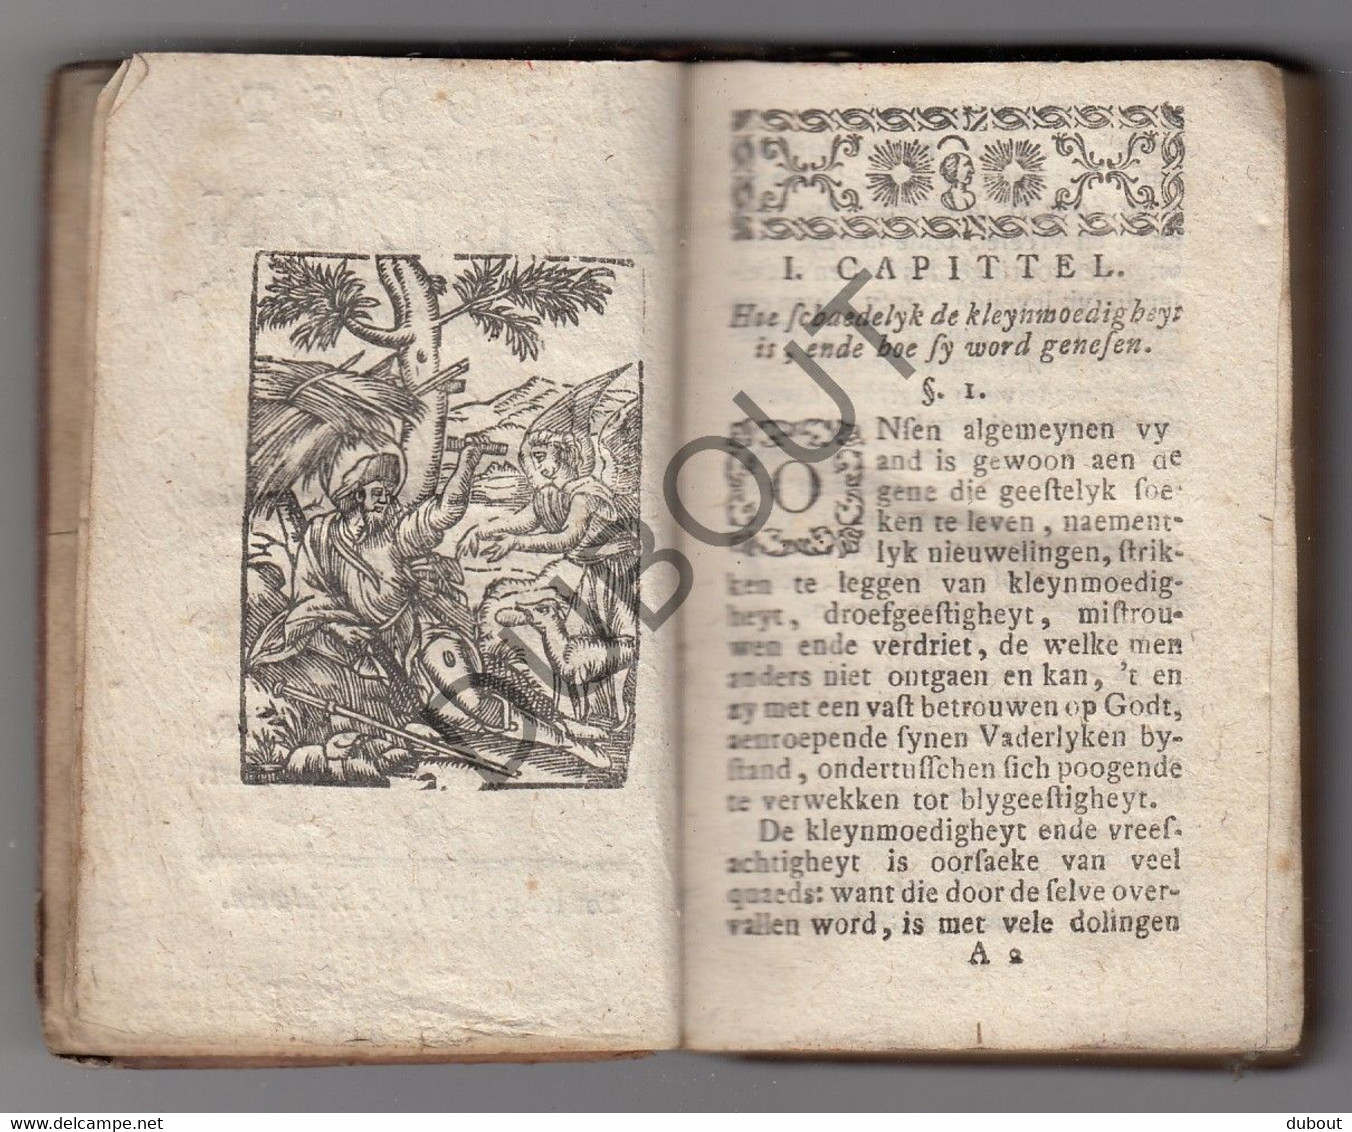 IEPER: Troost Der Zielen - Auteur L. Blosius - 1753 - Druk T.F. Walwein (V397) - Anciens